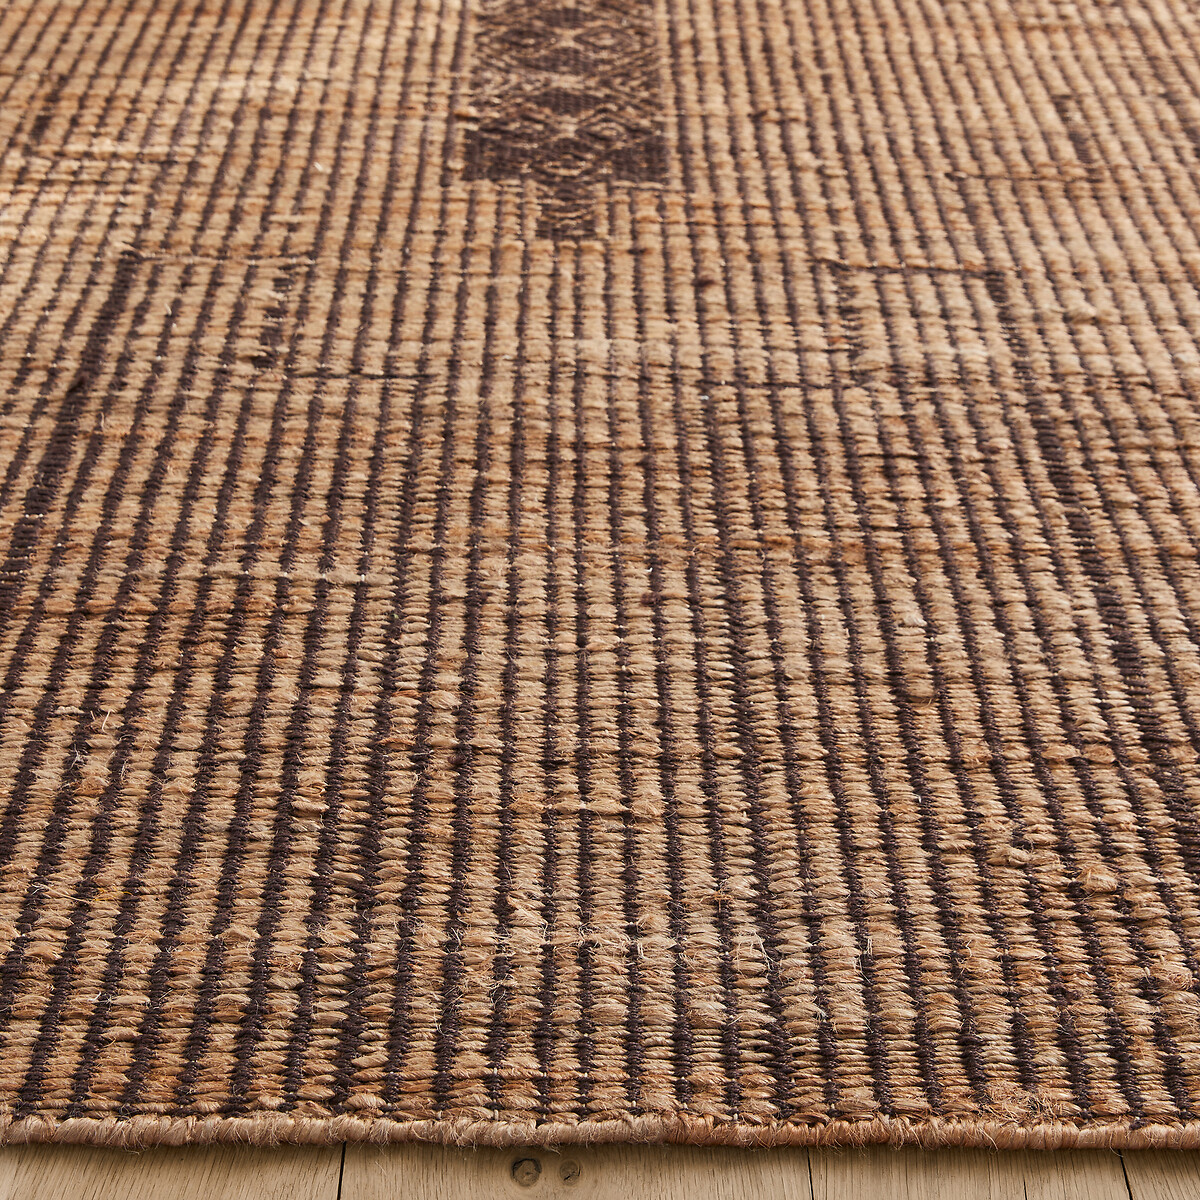 Ковер из плетеной ткани из джута и хлопка Jutiss  120 x 180 см бежевый LaRedoute, размер 120 x 180 см - фото 2